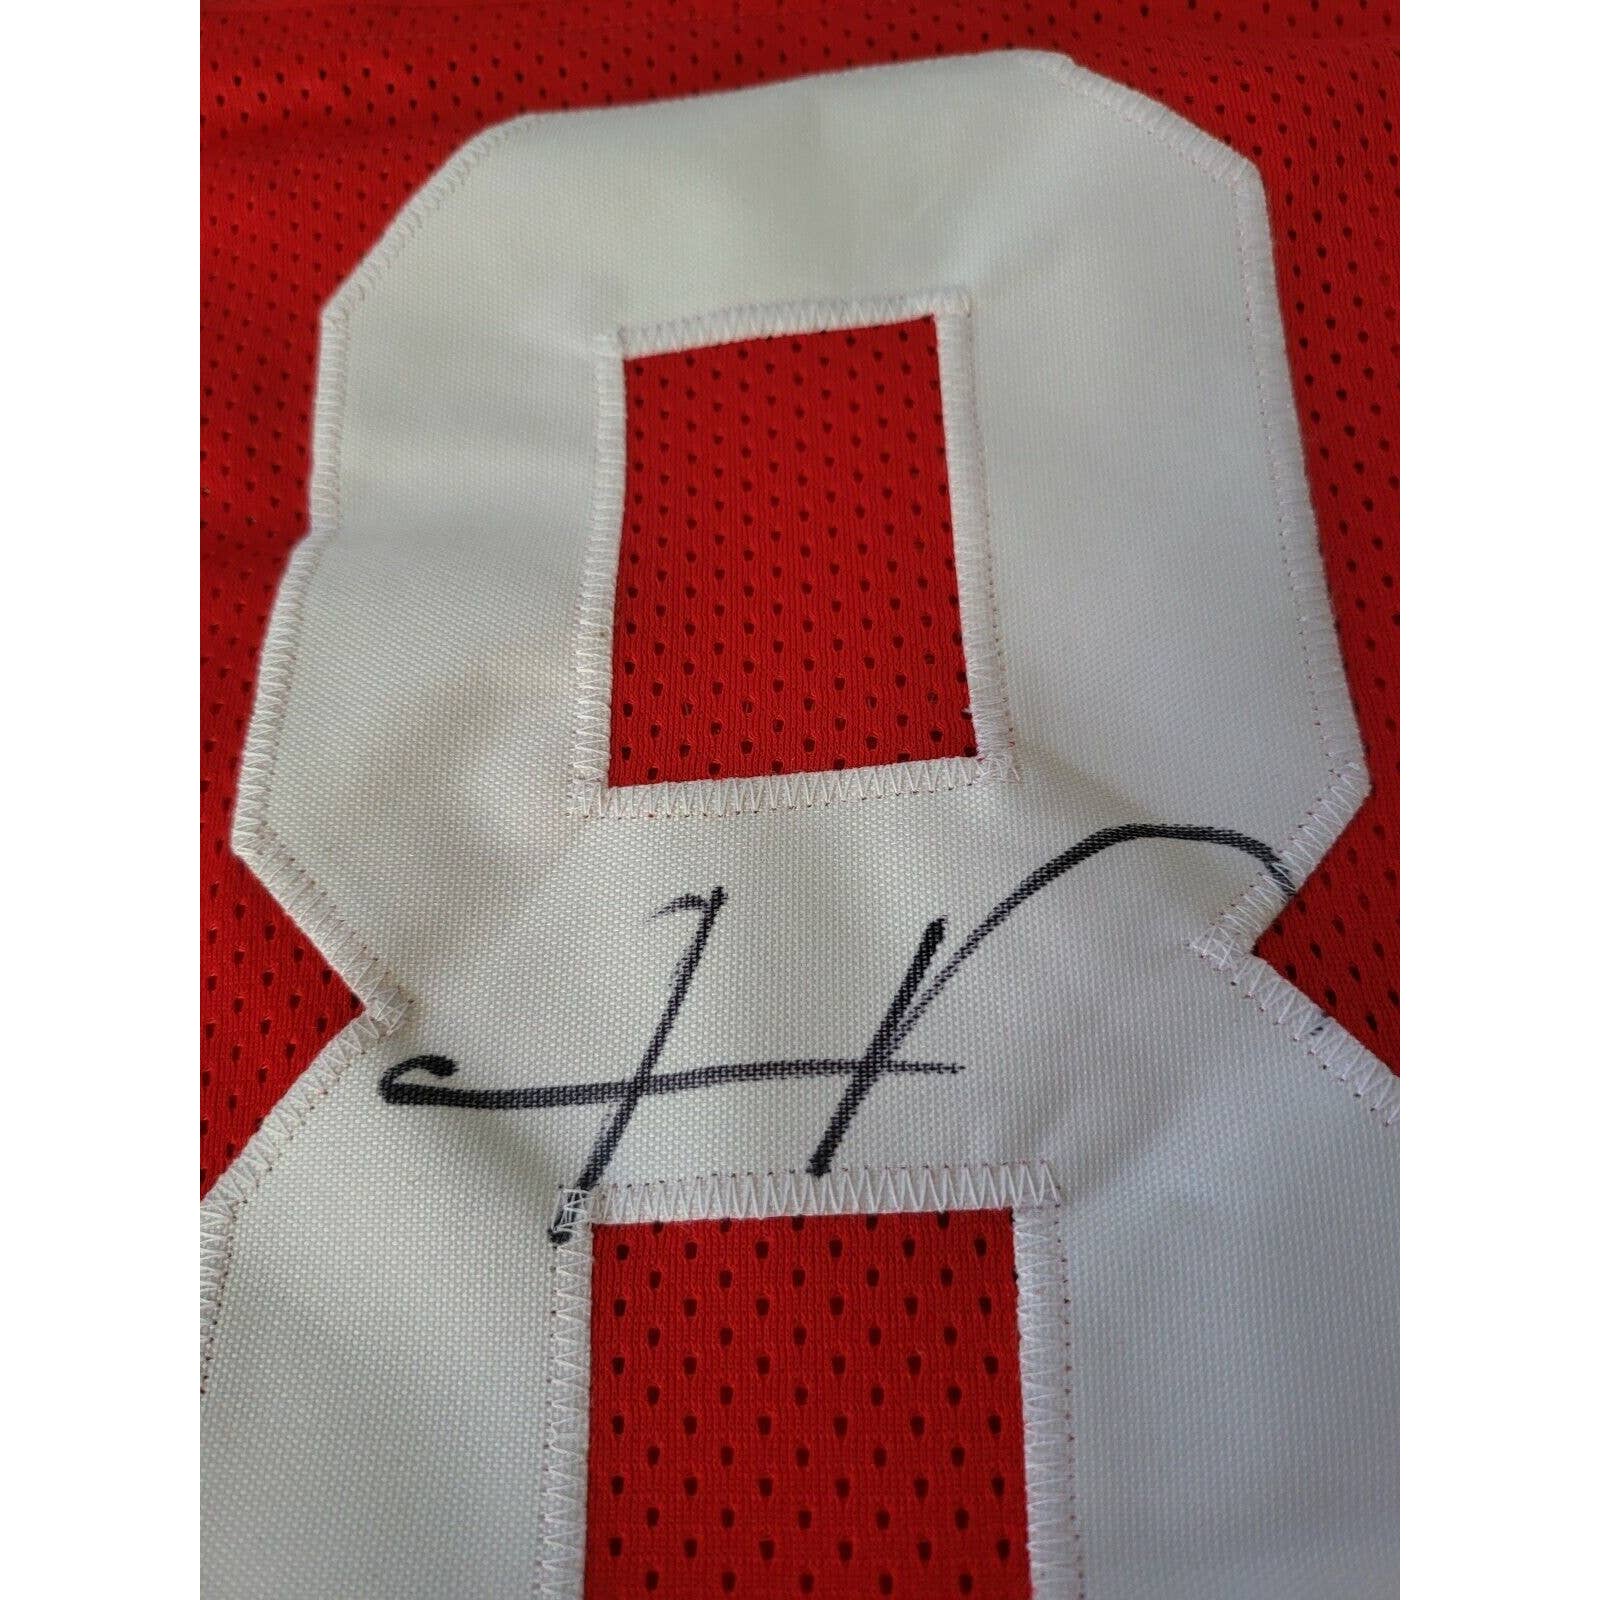 Vernon Davis Autographed/Signed Jersey Beckett Sticker San Francisco 49ers - TreasuresEvolved